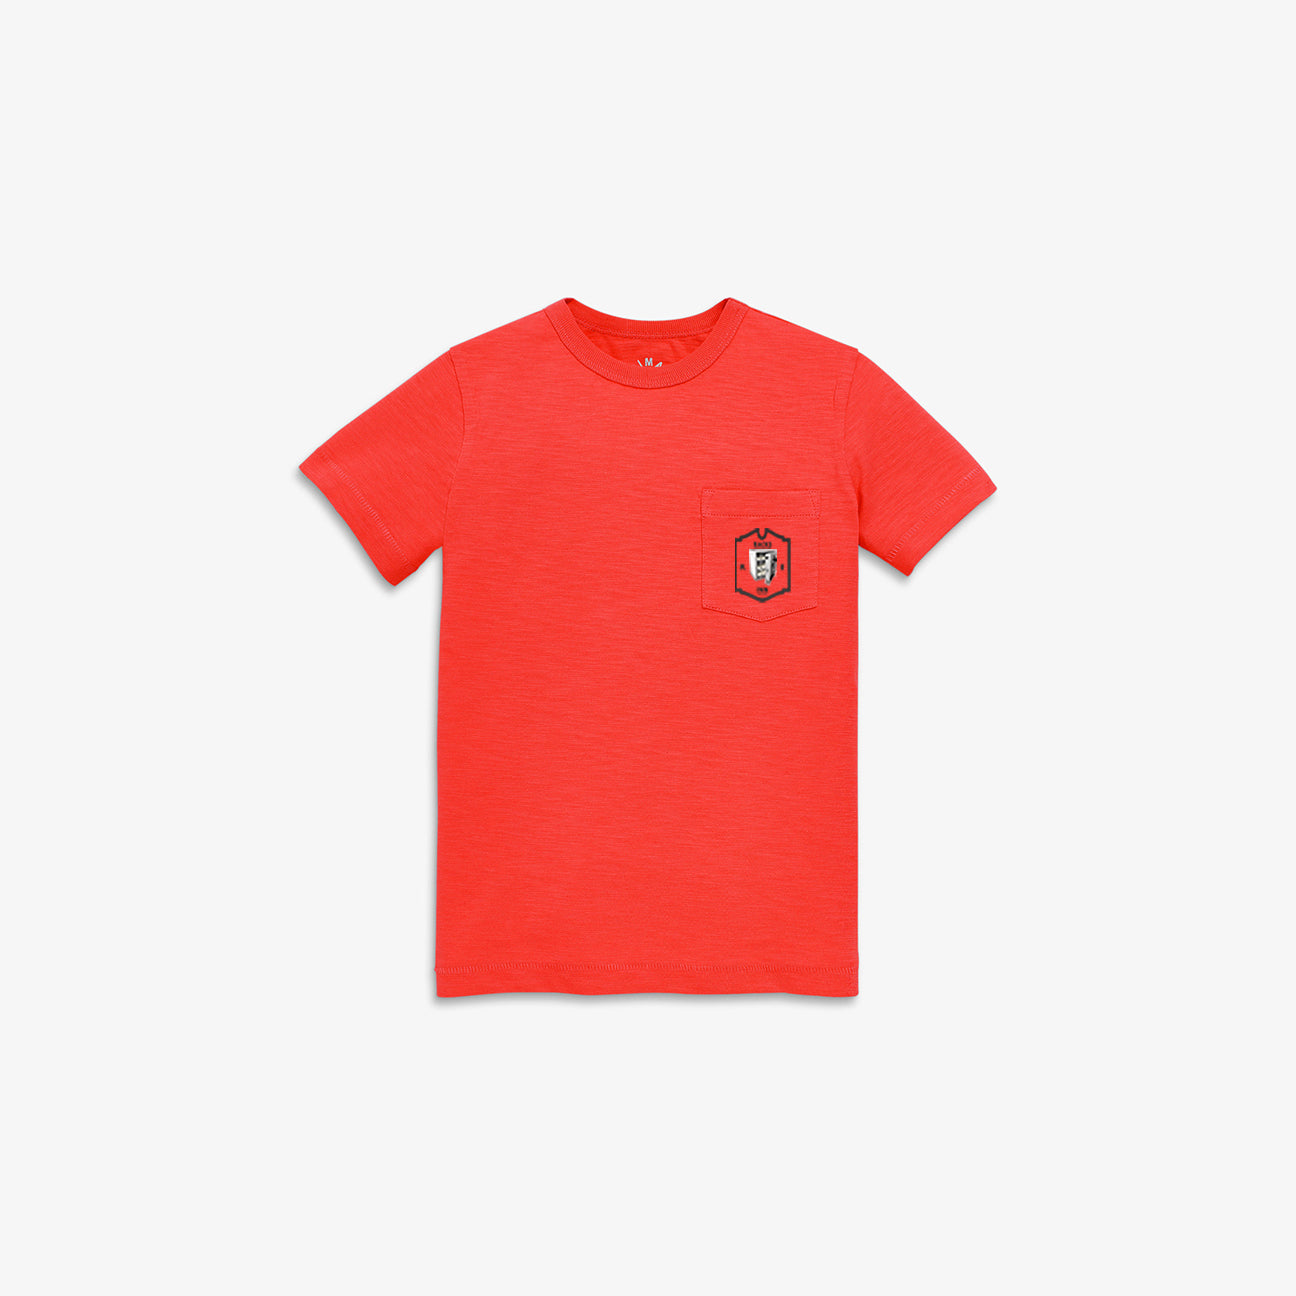 Pocket Mini Money Shirt - Red